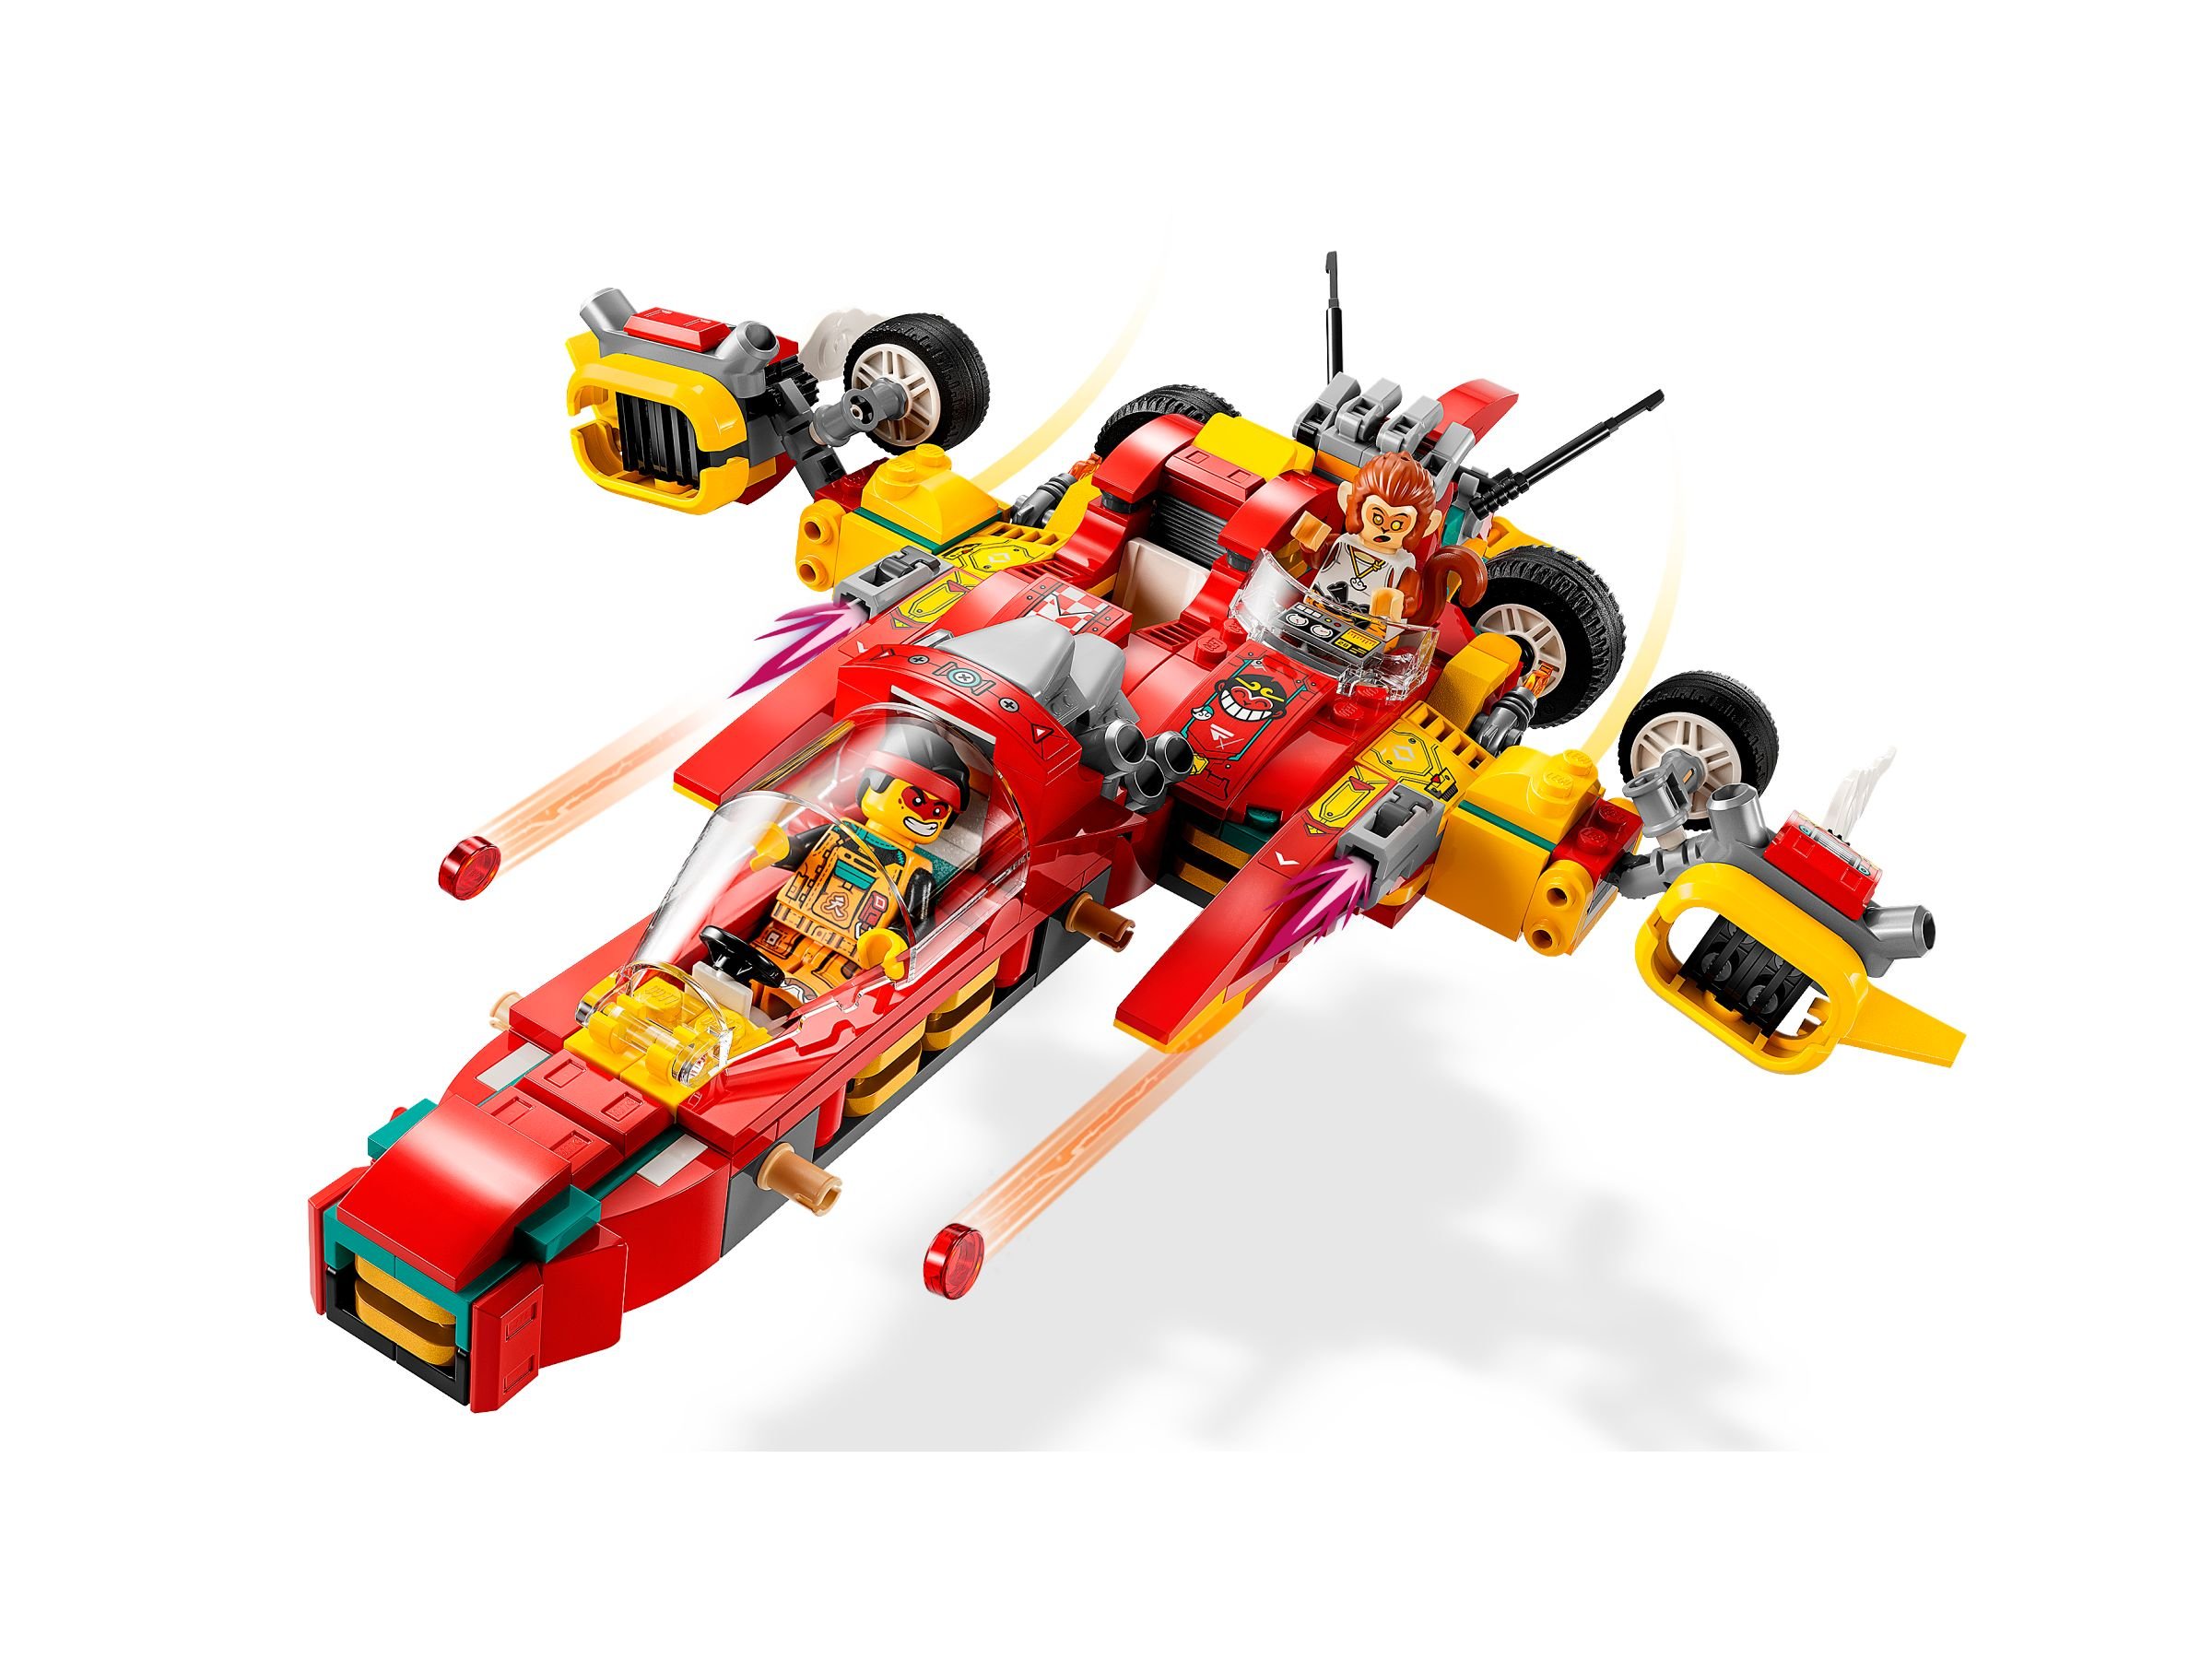 LEGO Monkie Kid 80050 Kreative Fahrzeuge LEGO_80050_alt2.jpg